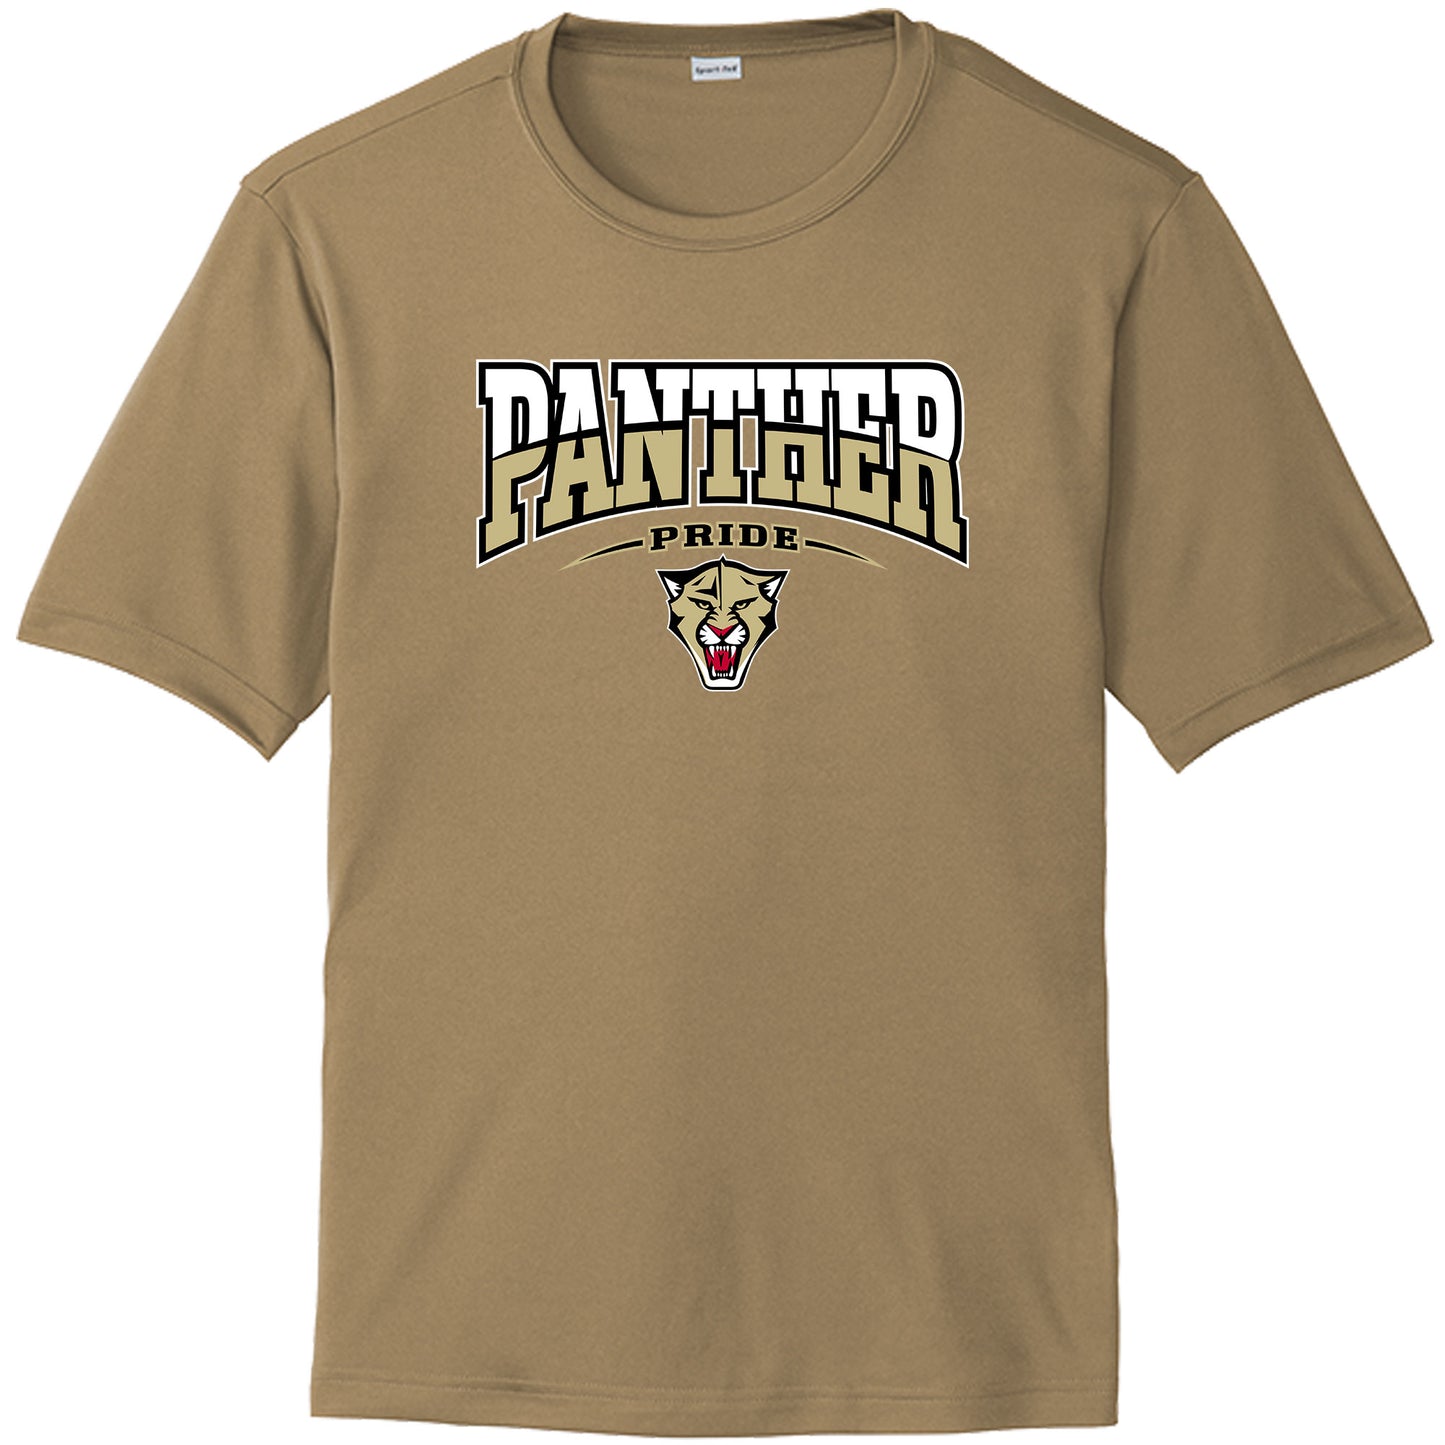 Plant High School Drifit Shirt "Panthers Pride"